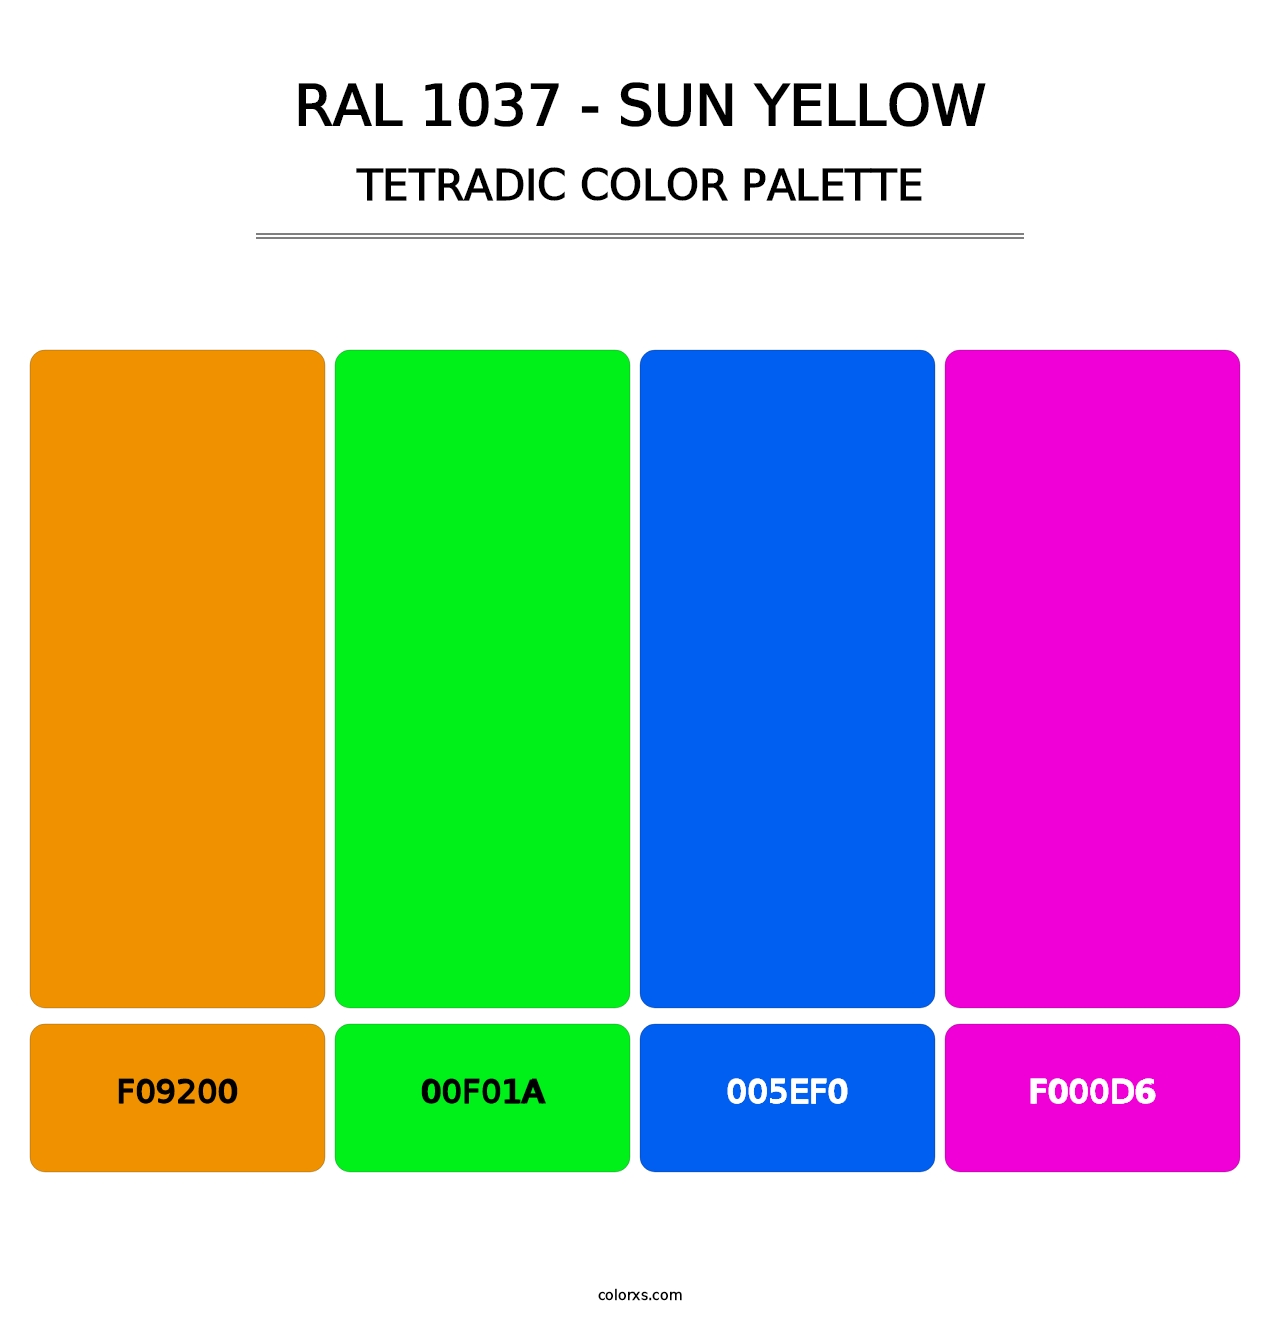 RAL 1037 - Sun Yellow - Tetradic Color Palette